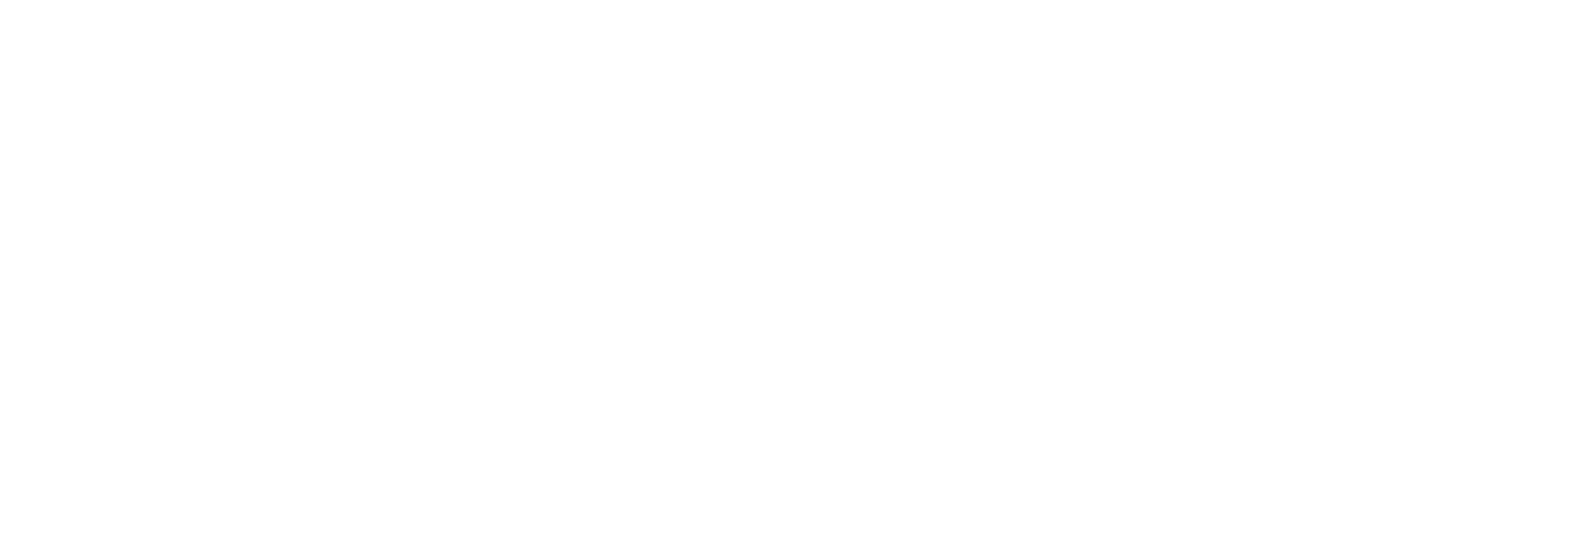 Tyson Foods
 logo large for dark backgrounds (transparent PNG)